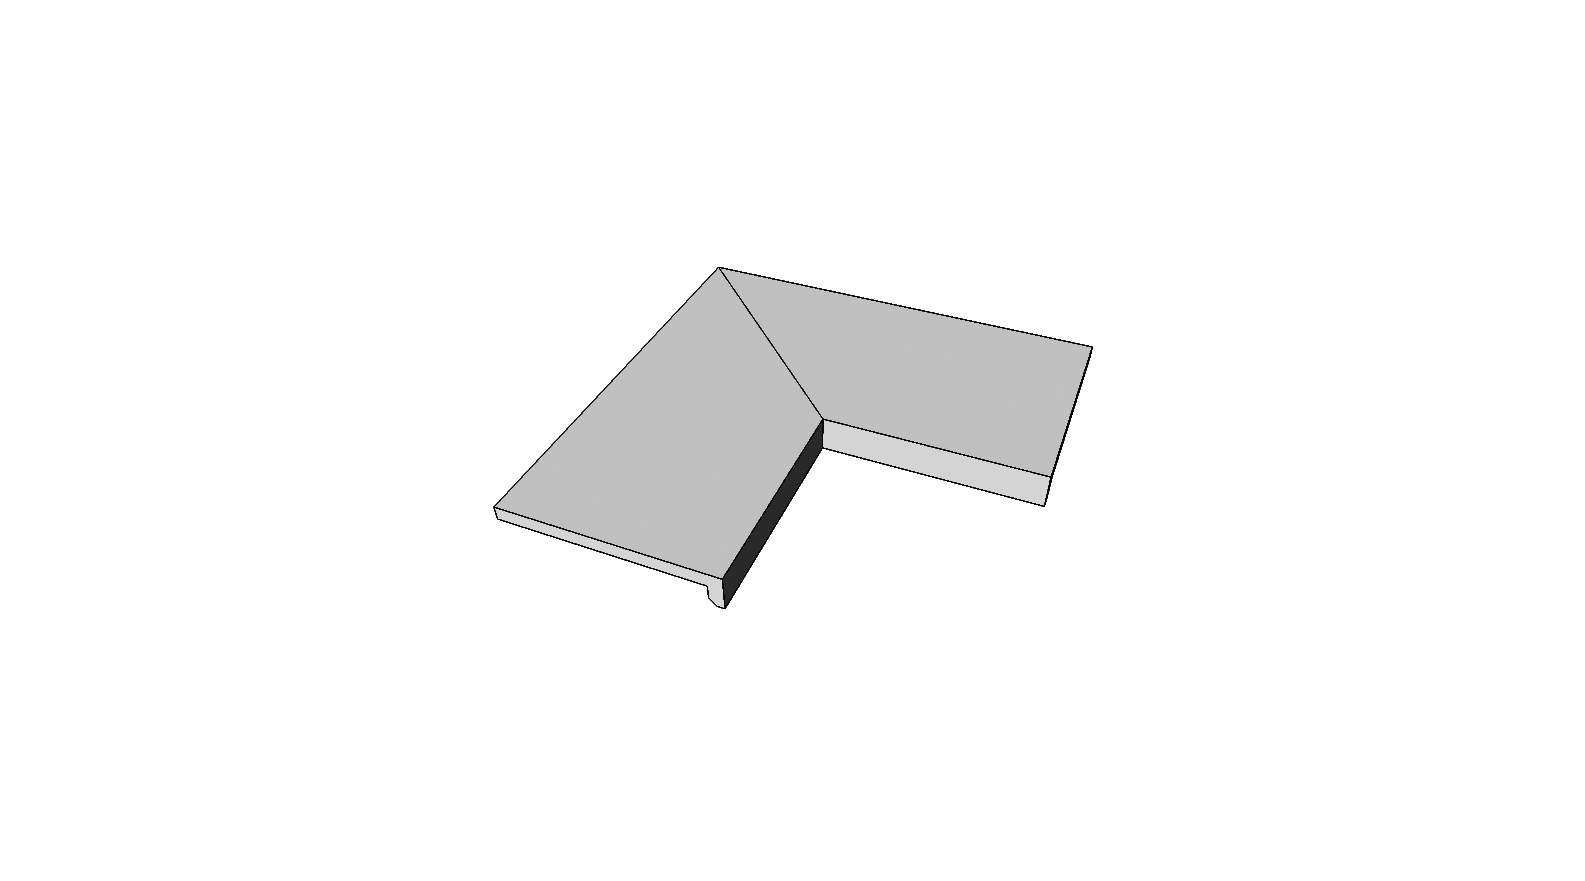 Randtegel met L-vormige aflopende rand vastgelijmd aan de binnenhoek (2 stuks) <span style="white-space:nowrap;">30x60x5 cm</span>   <span style="white-space:nowrap;">ép. 20mm</span>